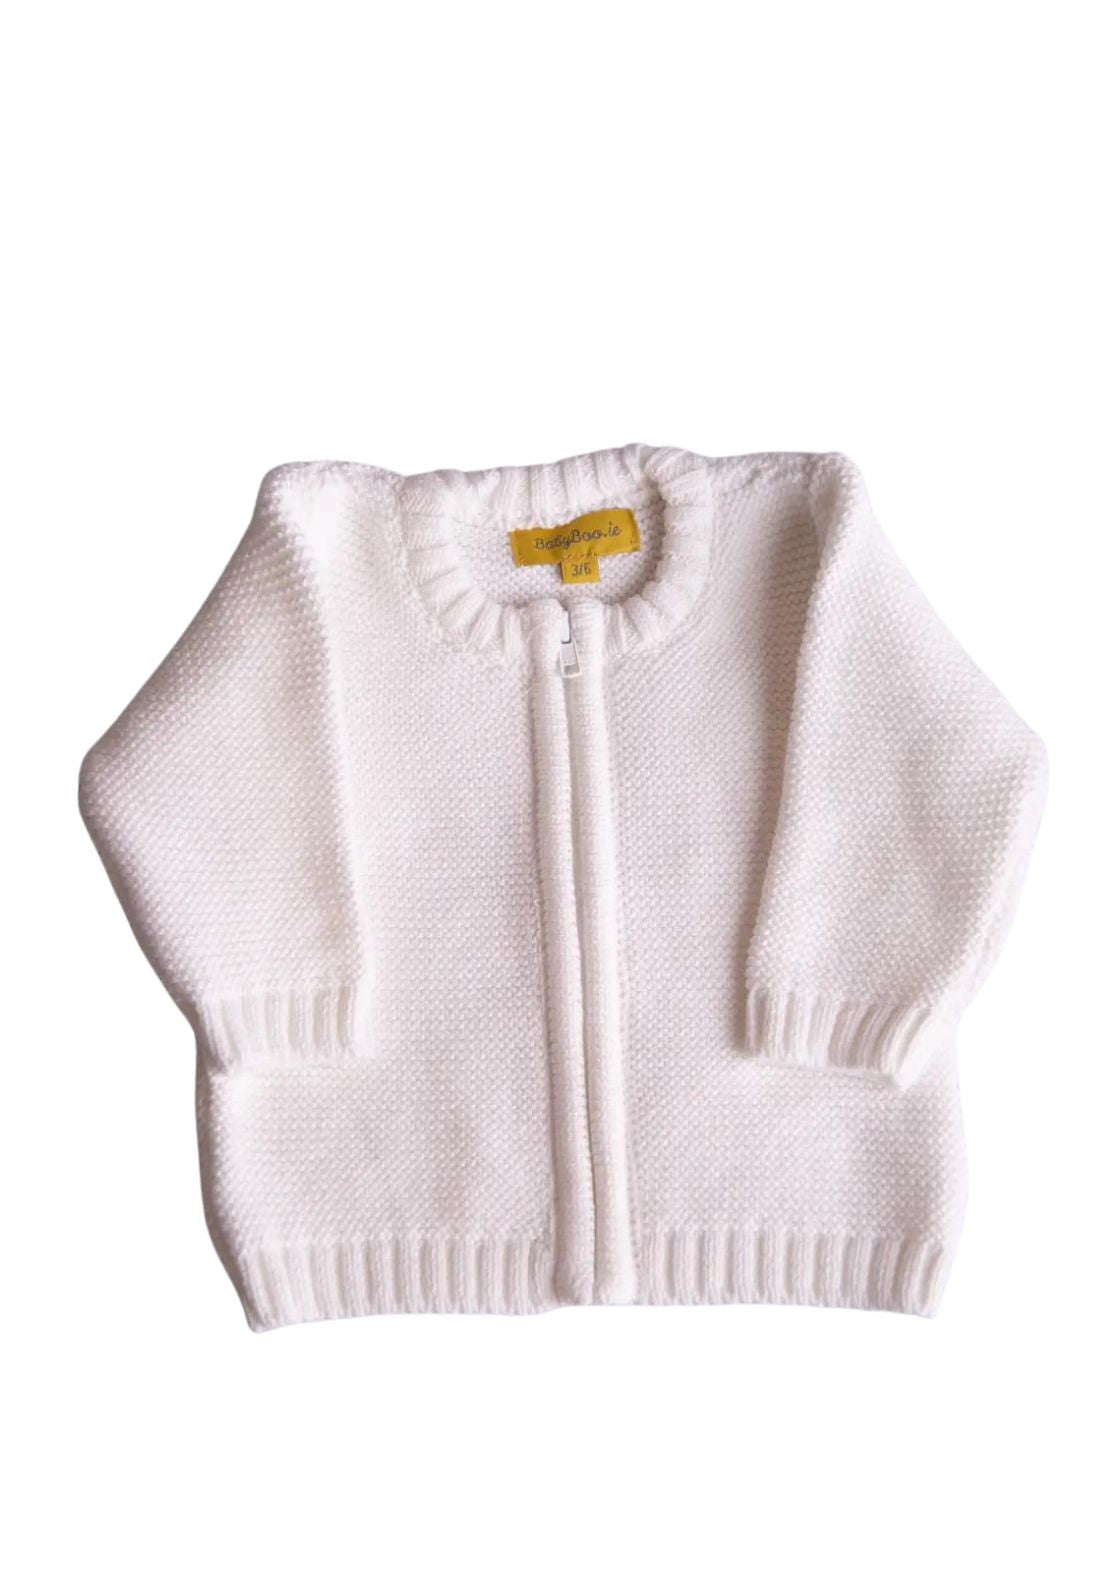 Babyboo Zipped Cardigan - White 1 Shaws Department Stores